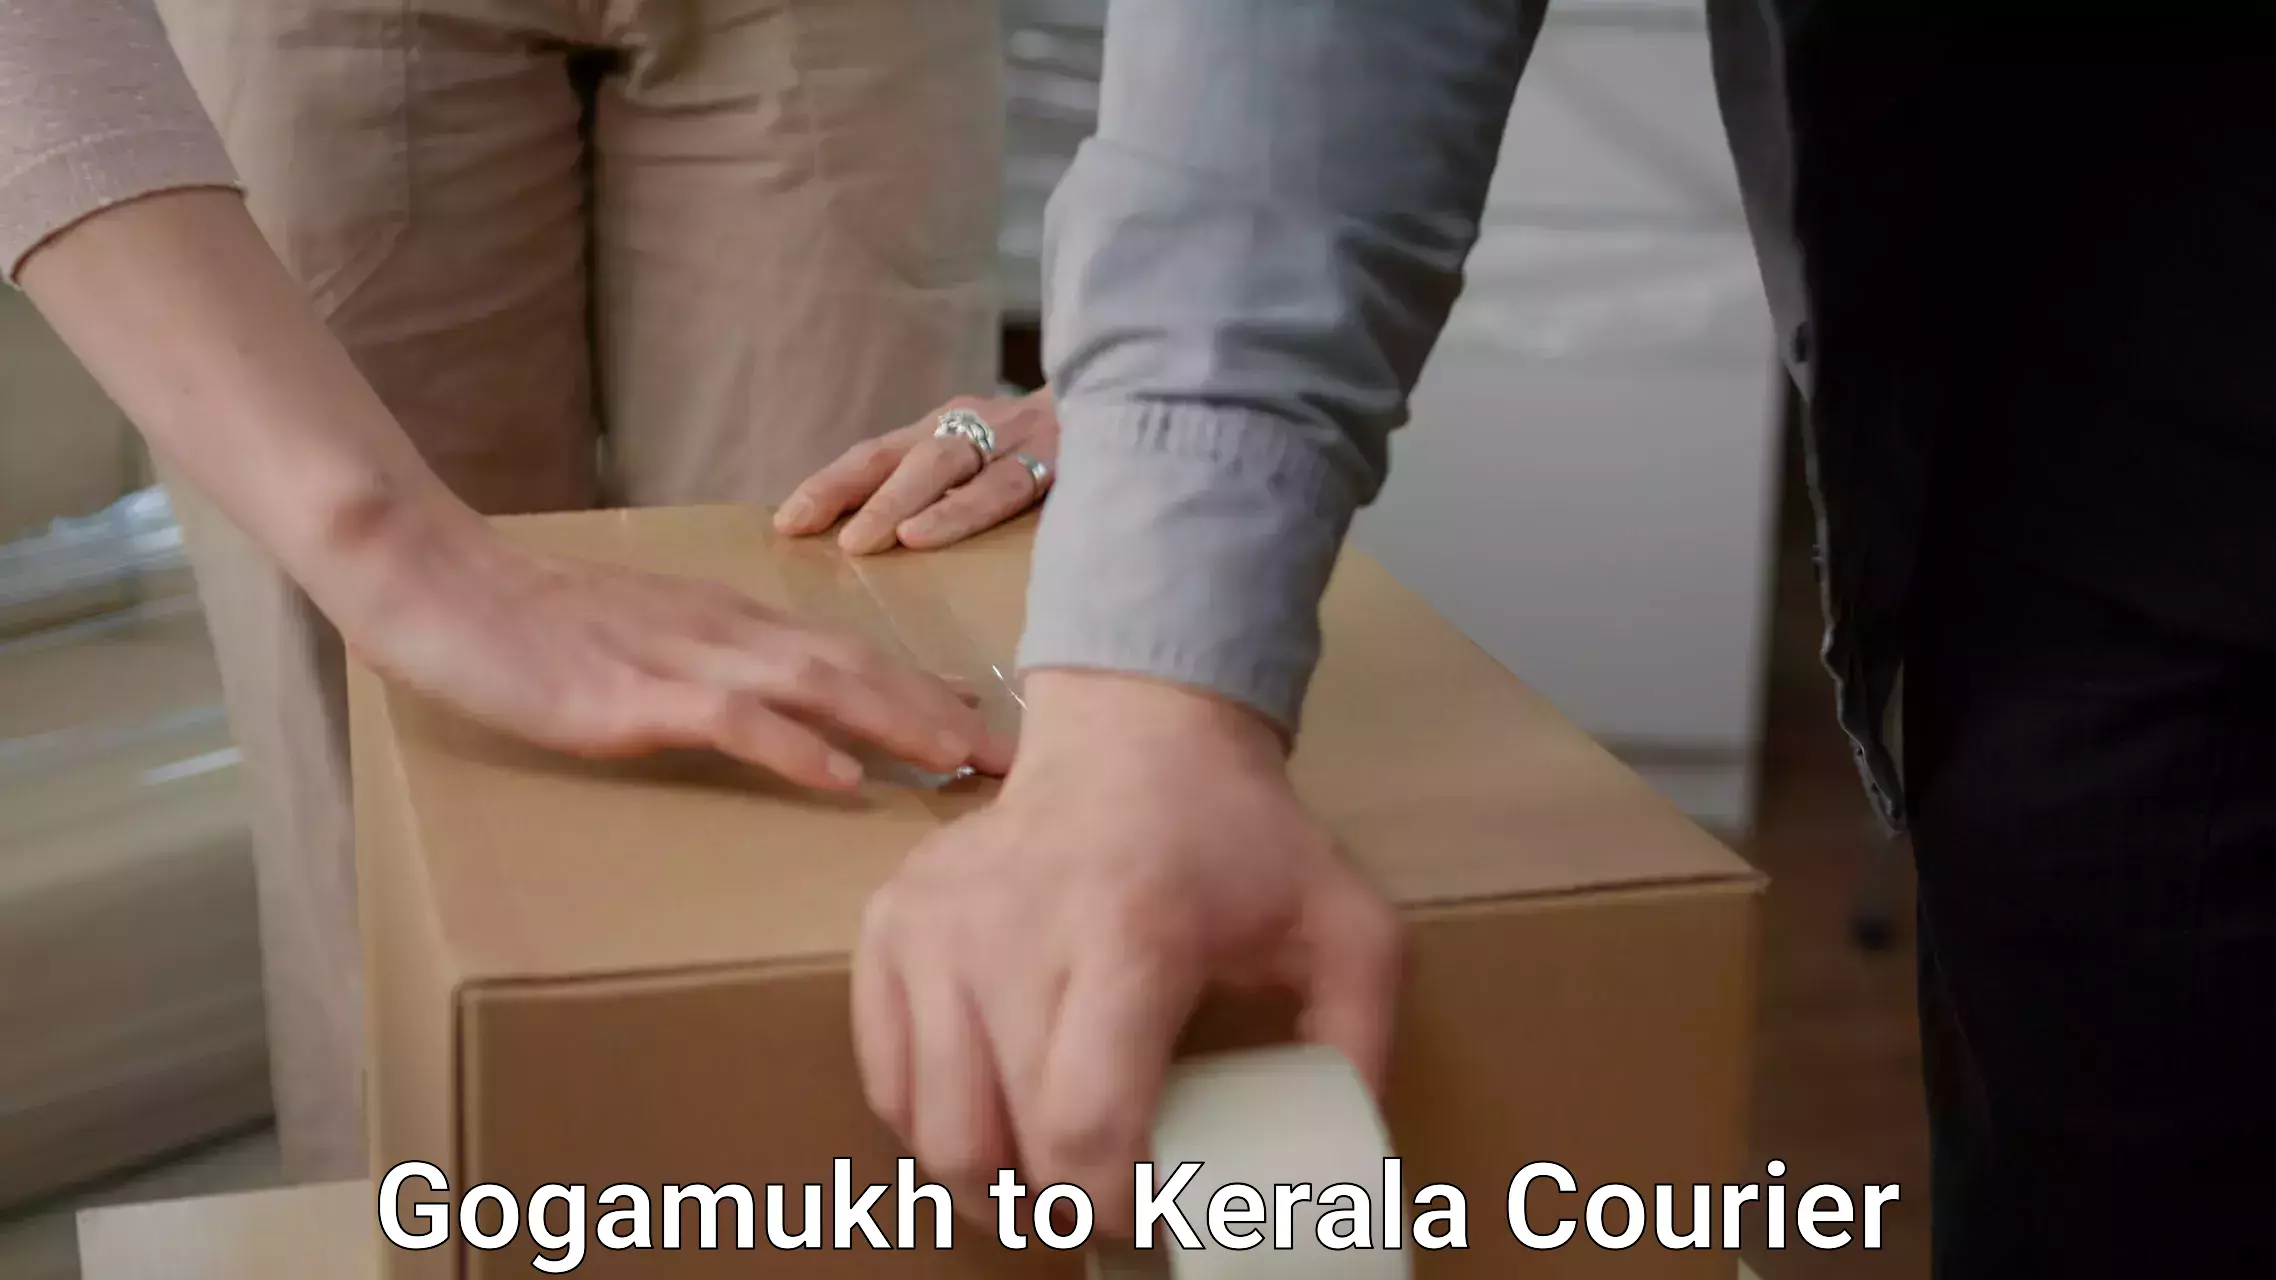 Furniture moving specialists Gogamukh to Kerala